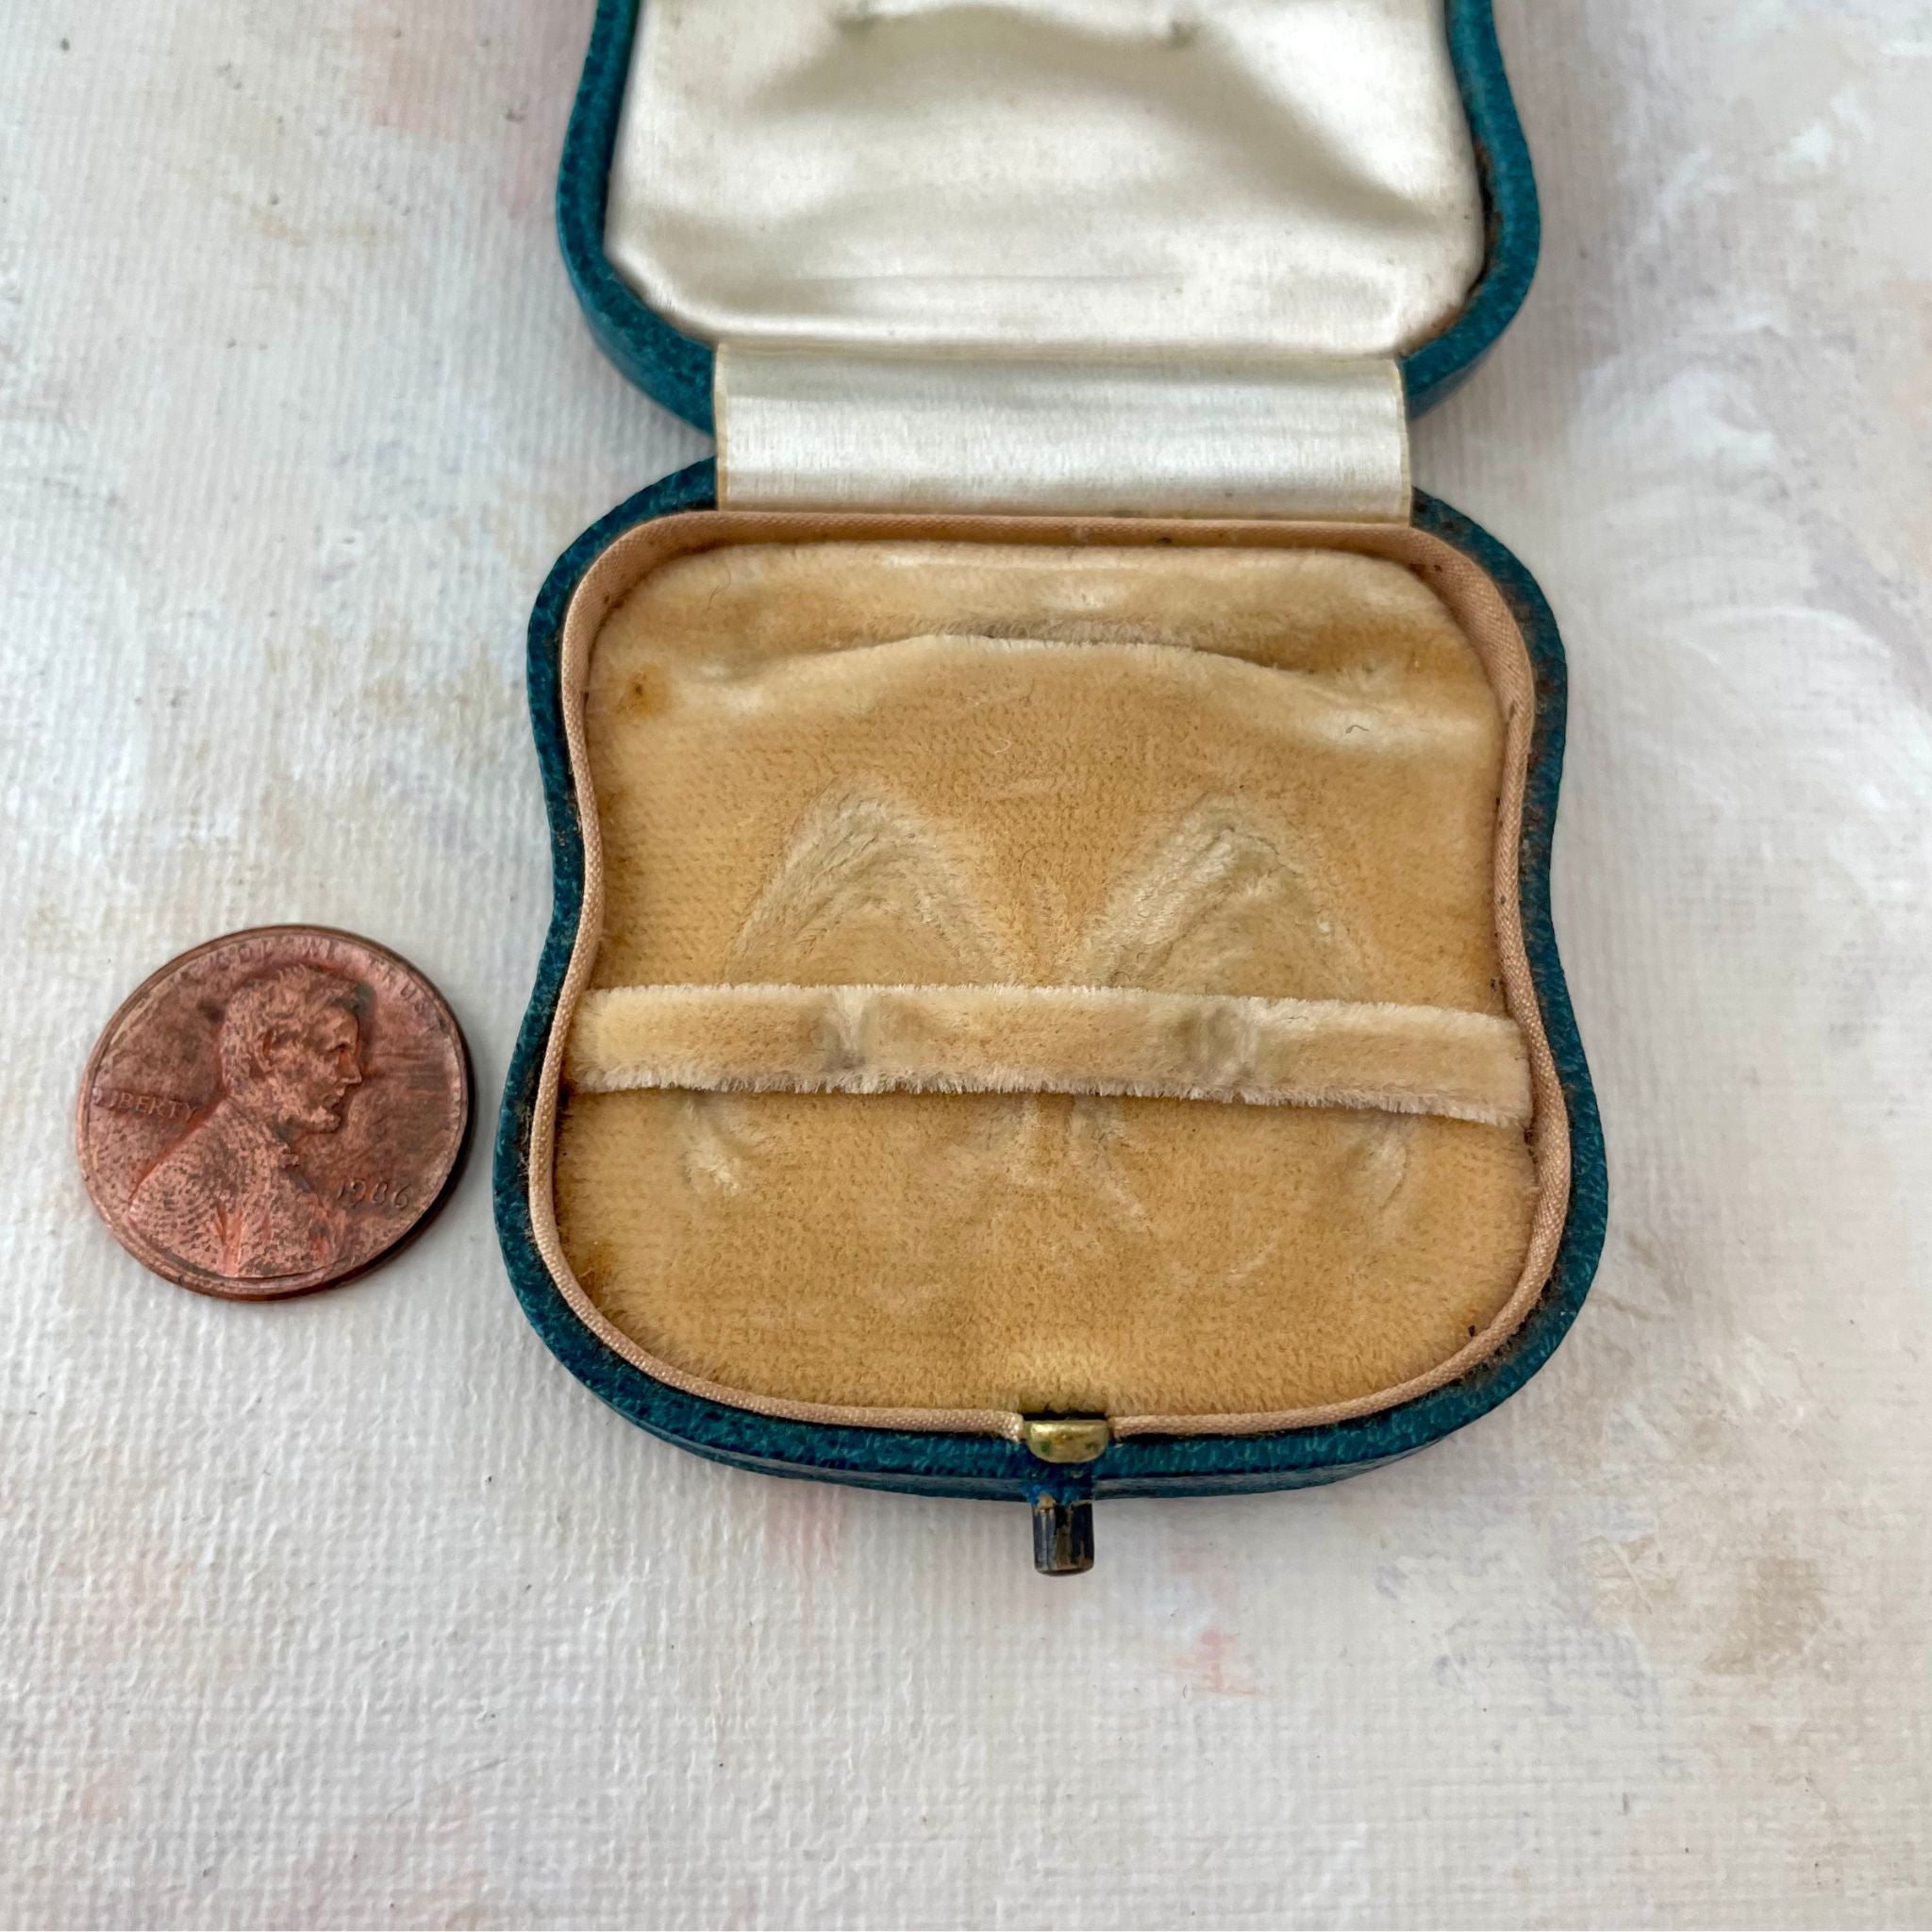 Vintage Jewelry Box - Teal Exterior